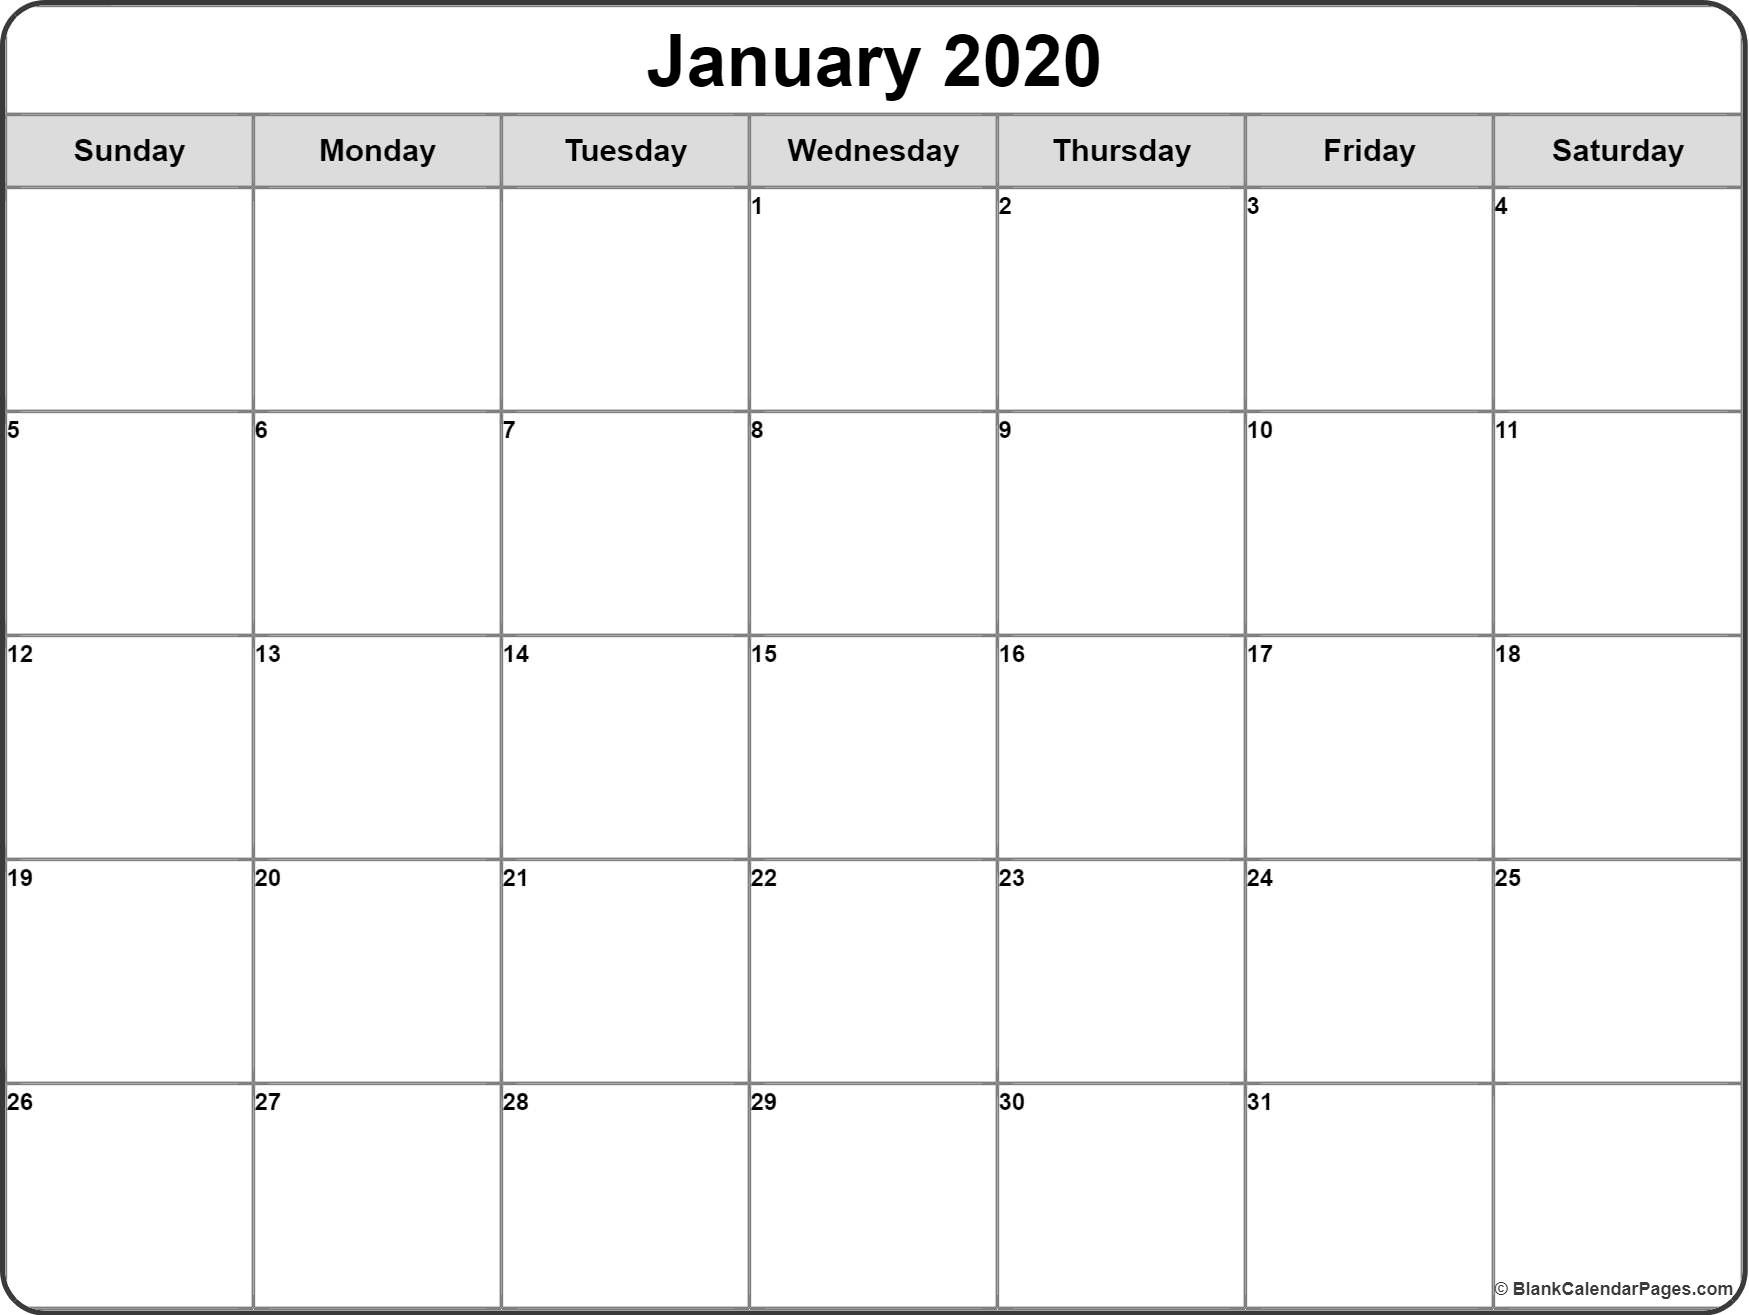 January 2020 Calendar | Free Printable Monthly Calendars-Free 2 Page Monthly Calendar 2020